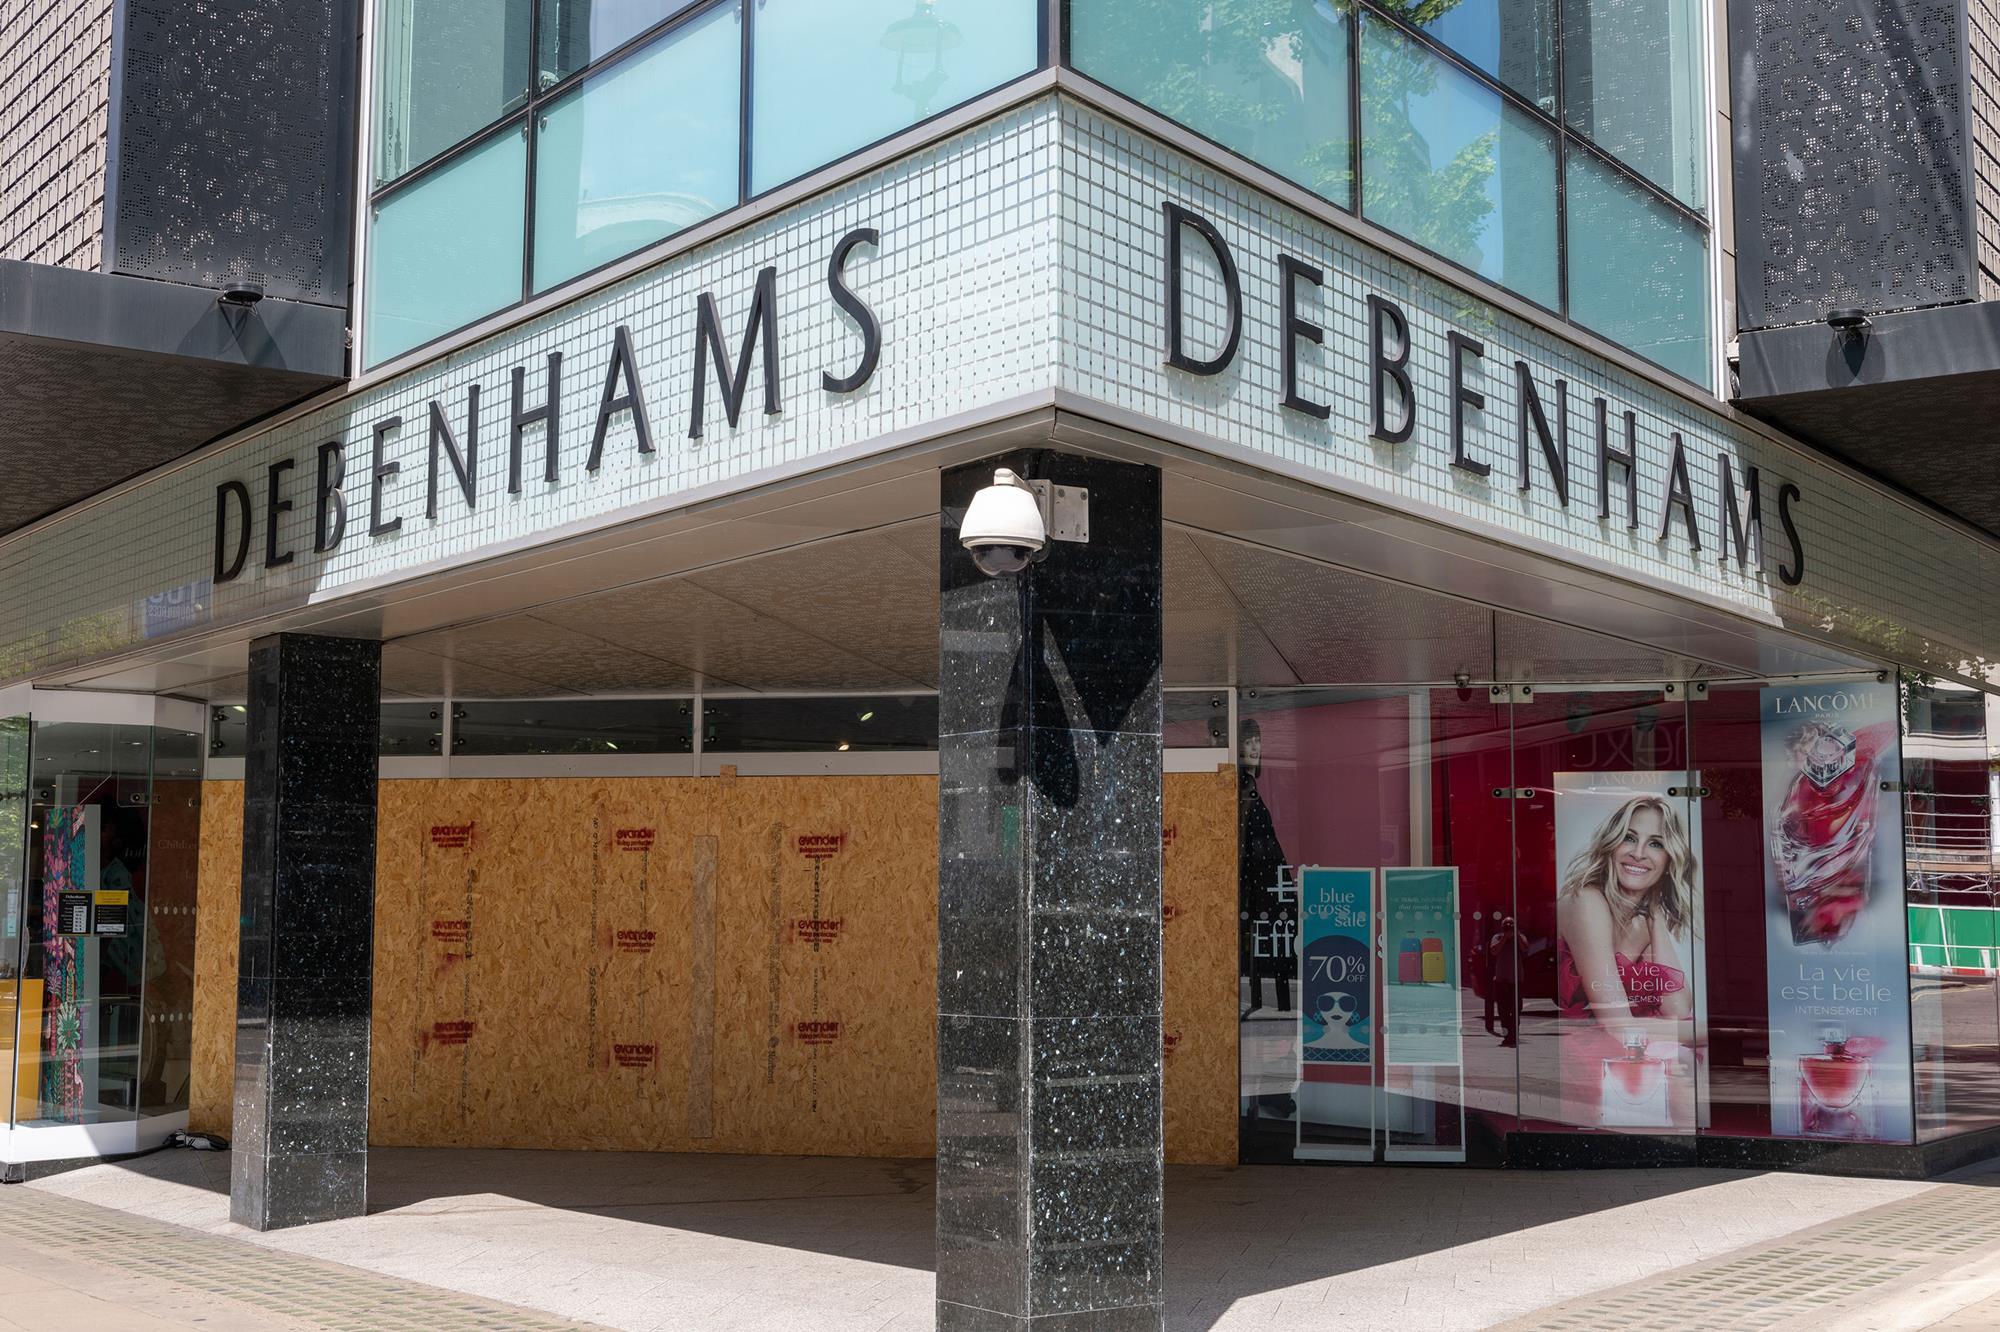 Debenhams - Oxford Street - London department stores - Time Out London